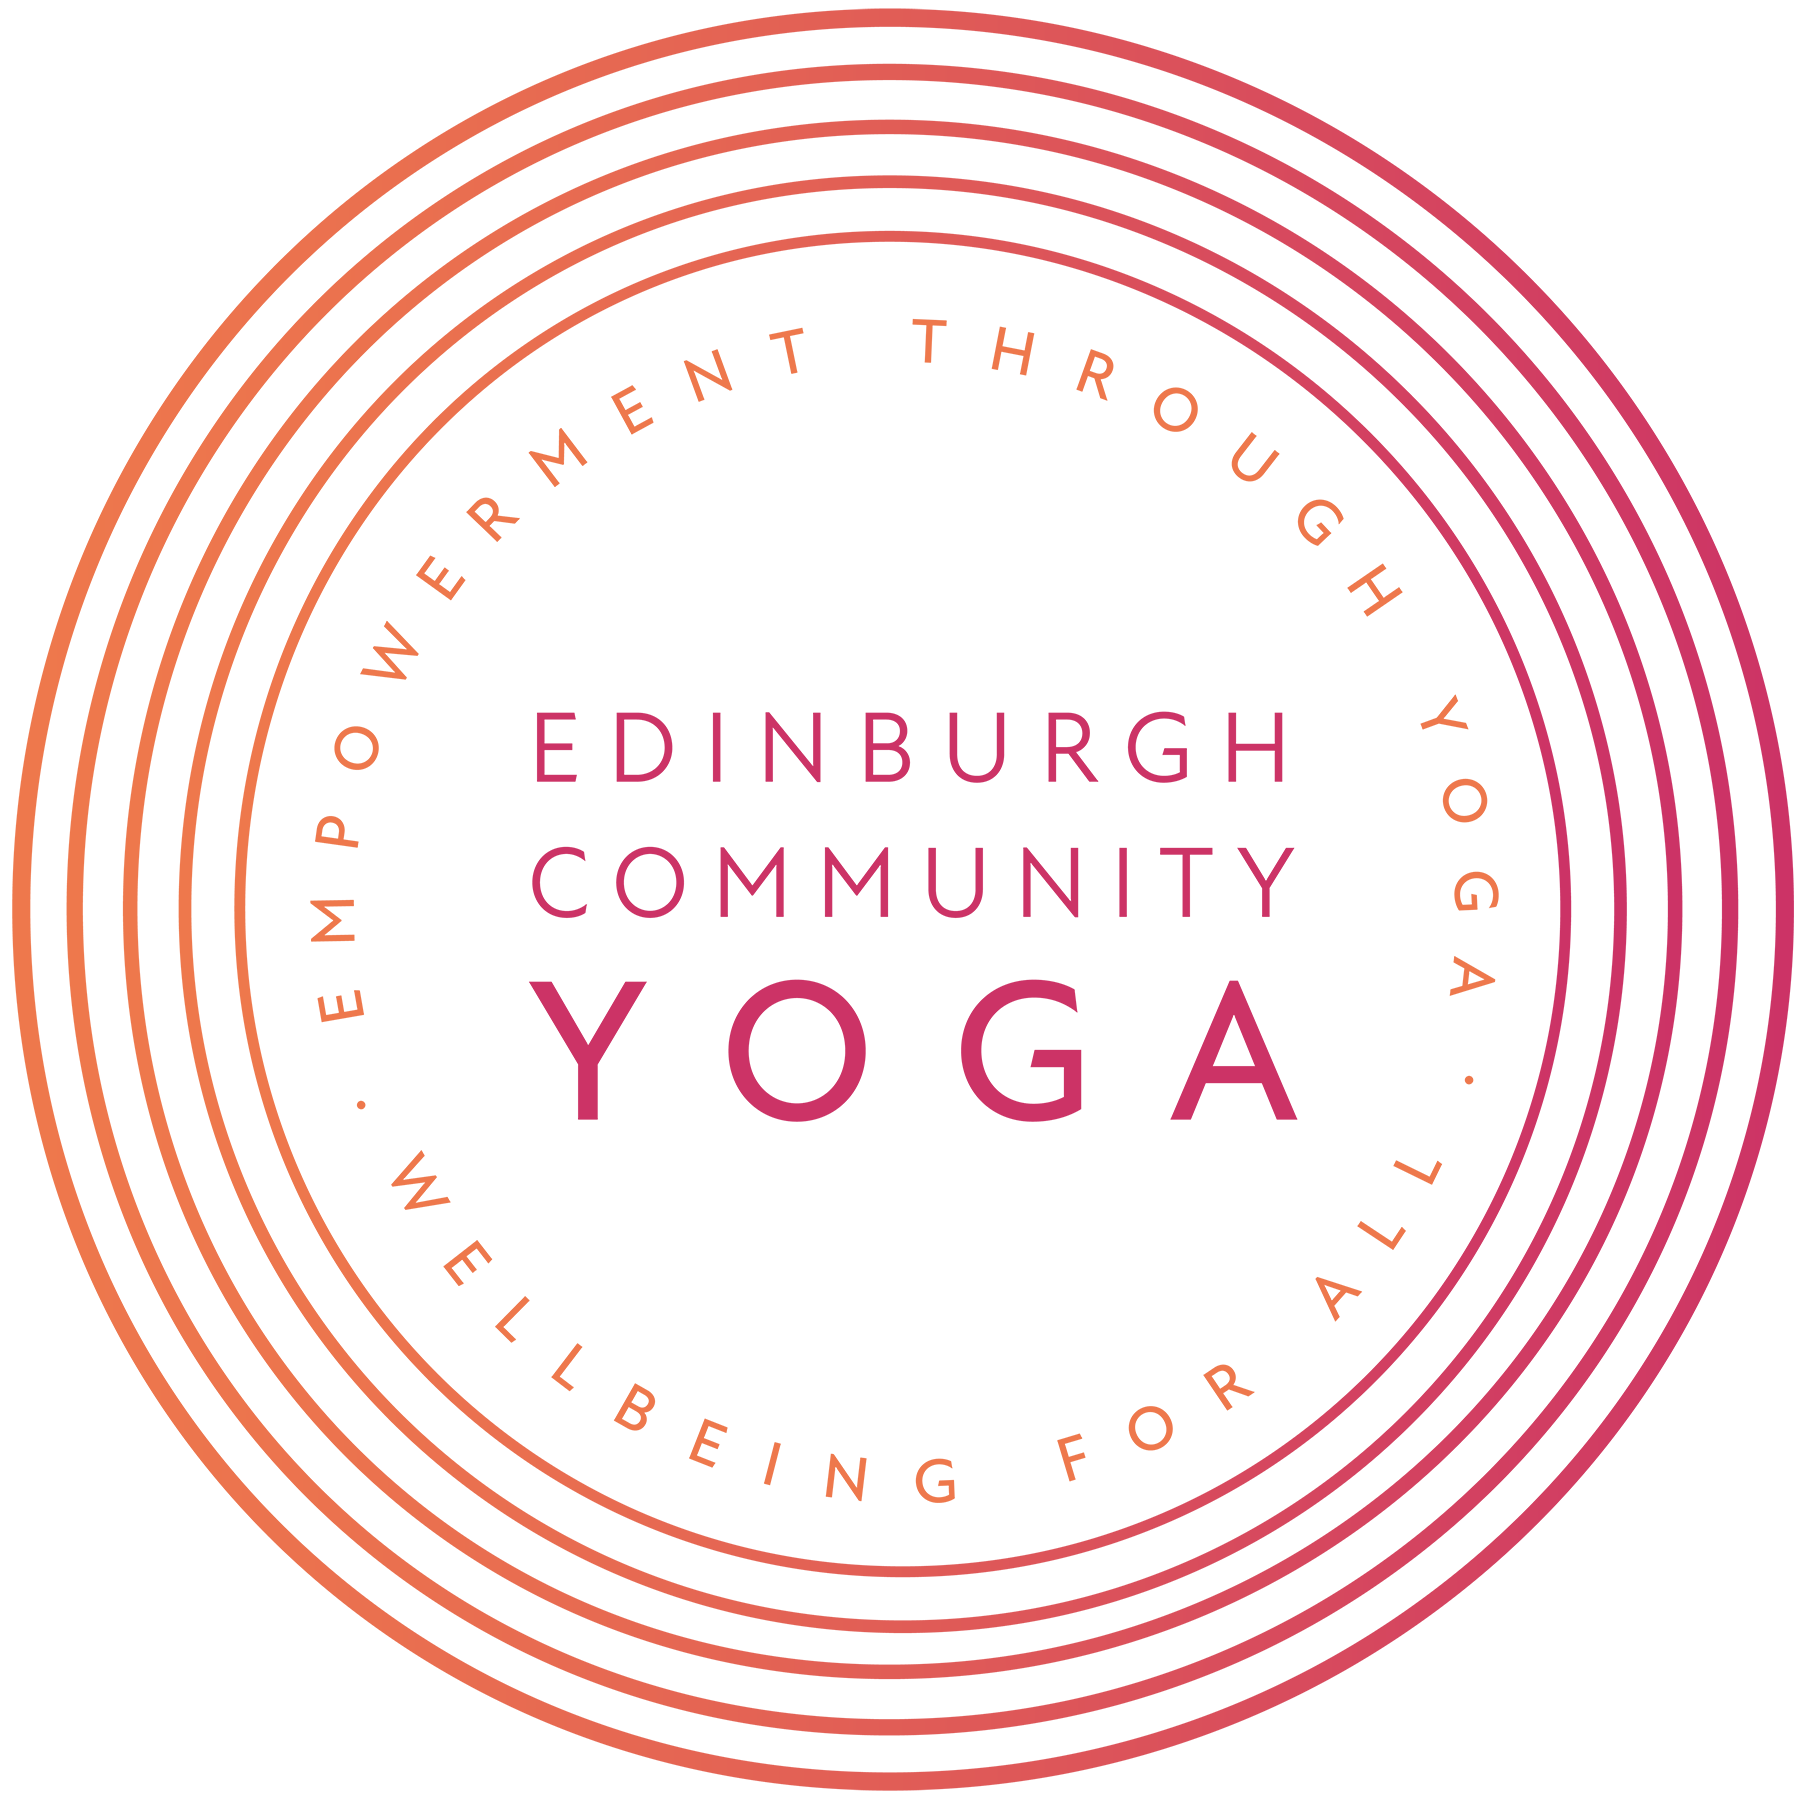 Edinburgh Community Yoga